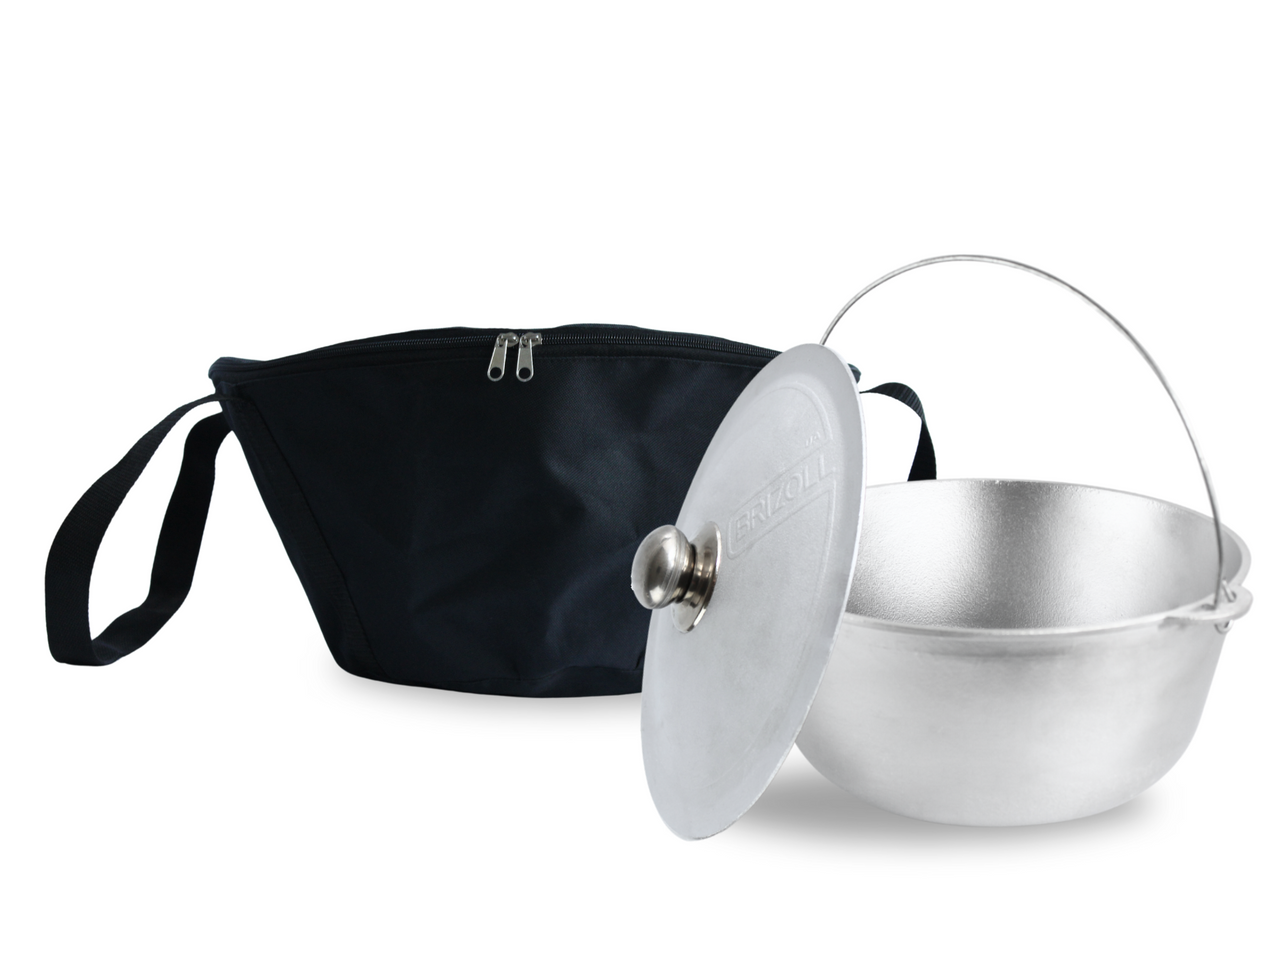 Aluminum cauldron Brizoll 8 l with bracket, lid, a tripod and a bag